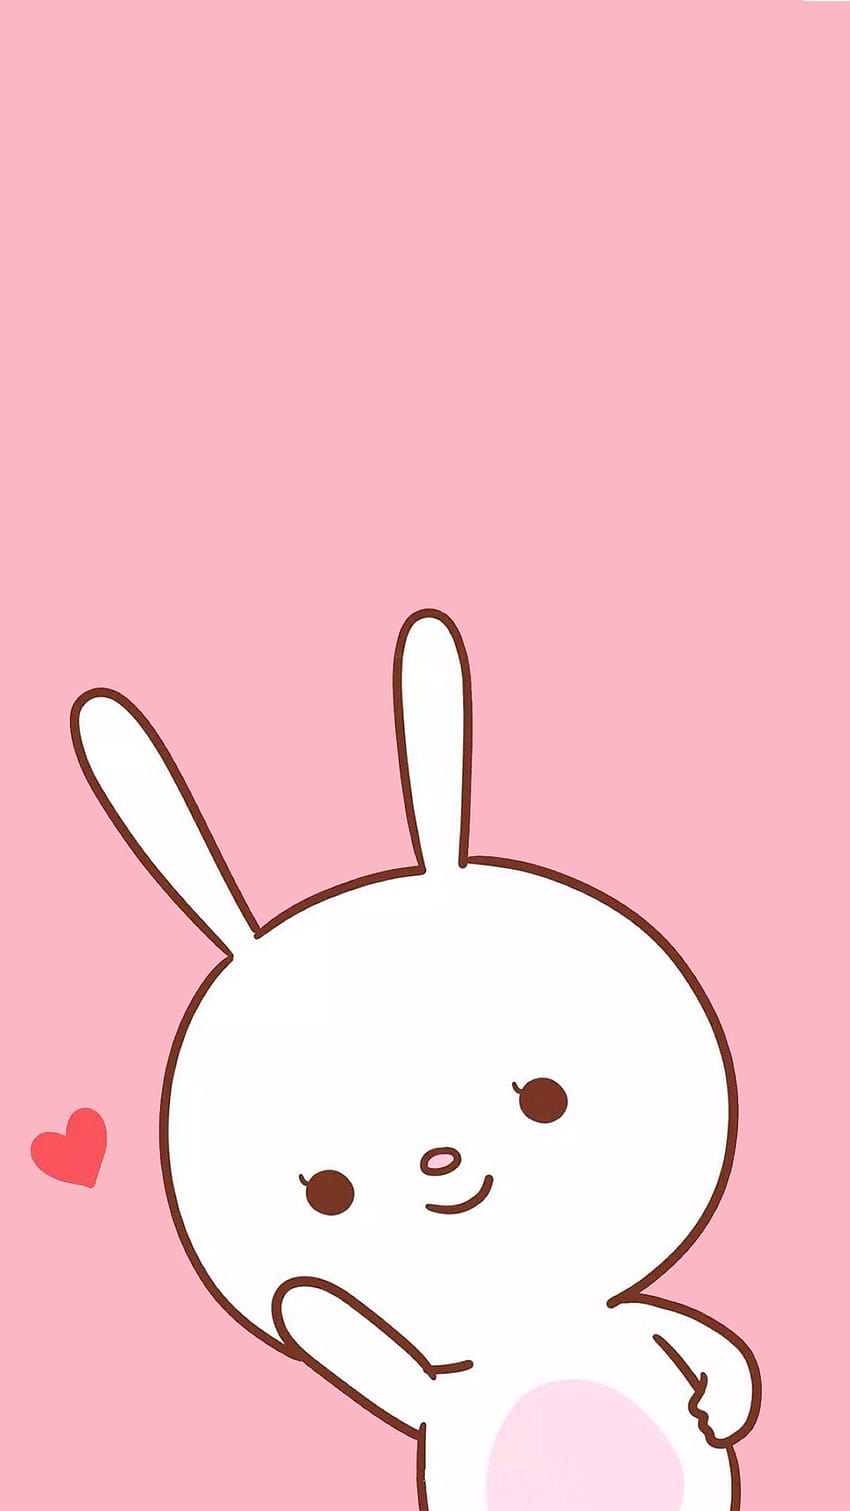 Lindo conejito de dibujos animados, conejito rosa conejo kawaii fondo de pantalla del teléfono